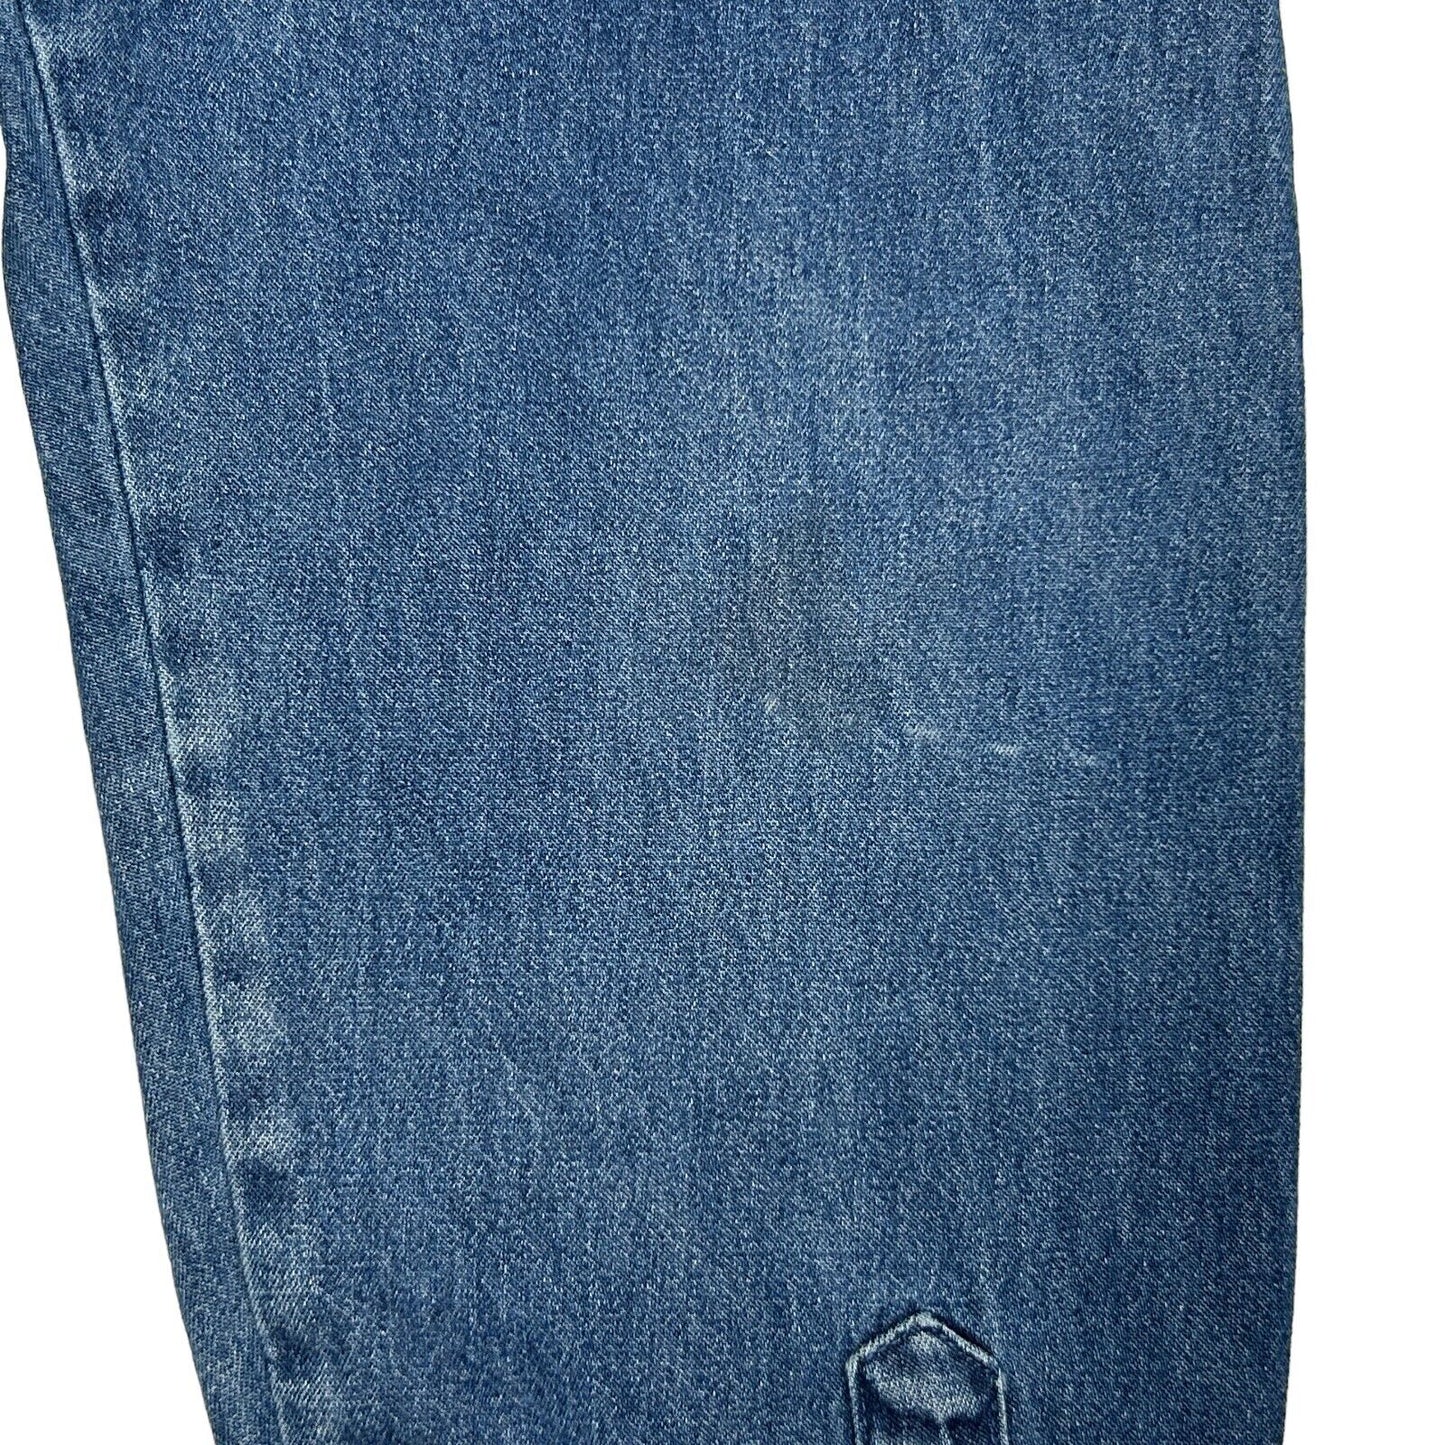 Lighthouse Mixed Media Art Denim Button Front Shirt Vintage 90s Blue Jean XL